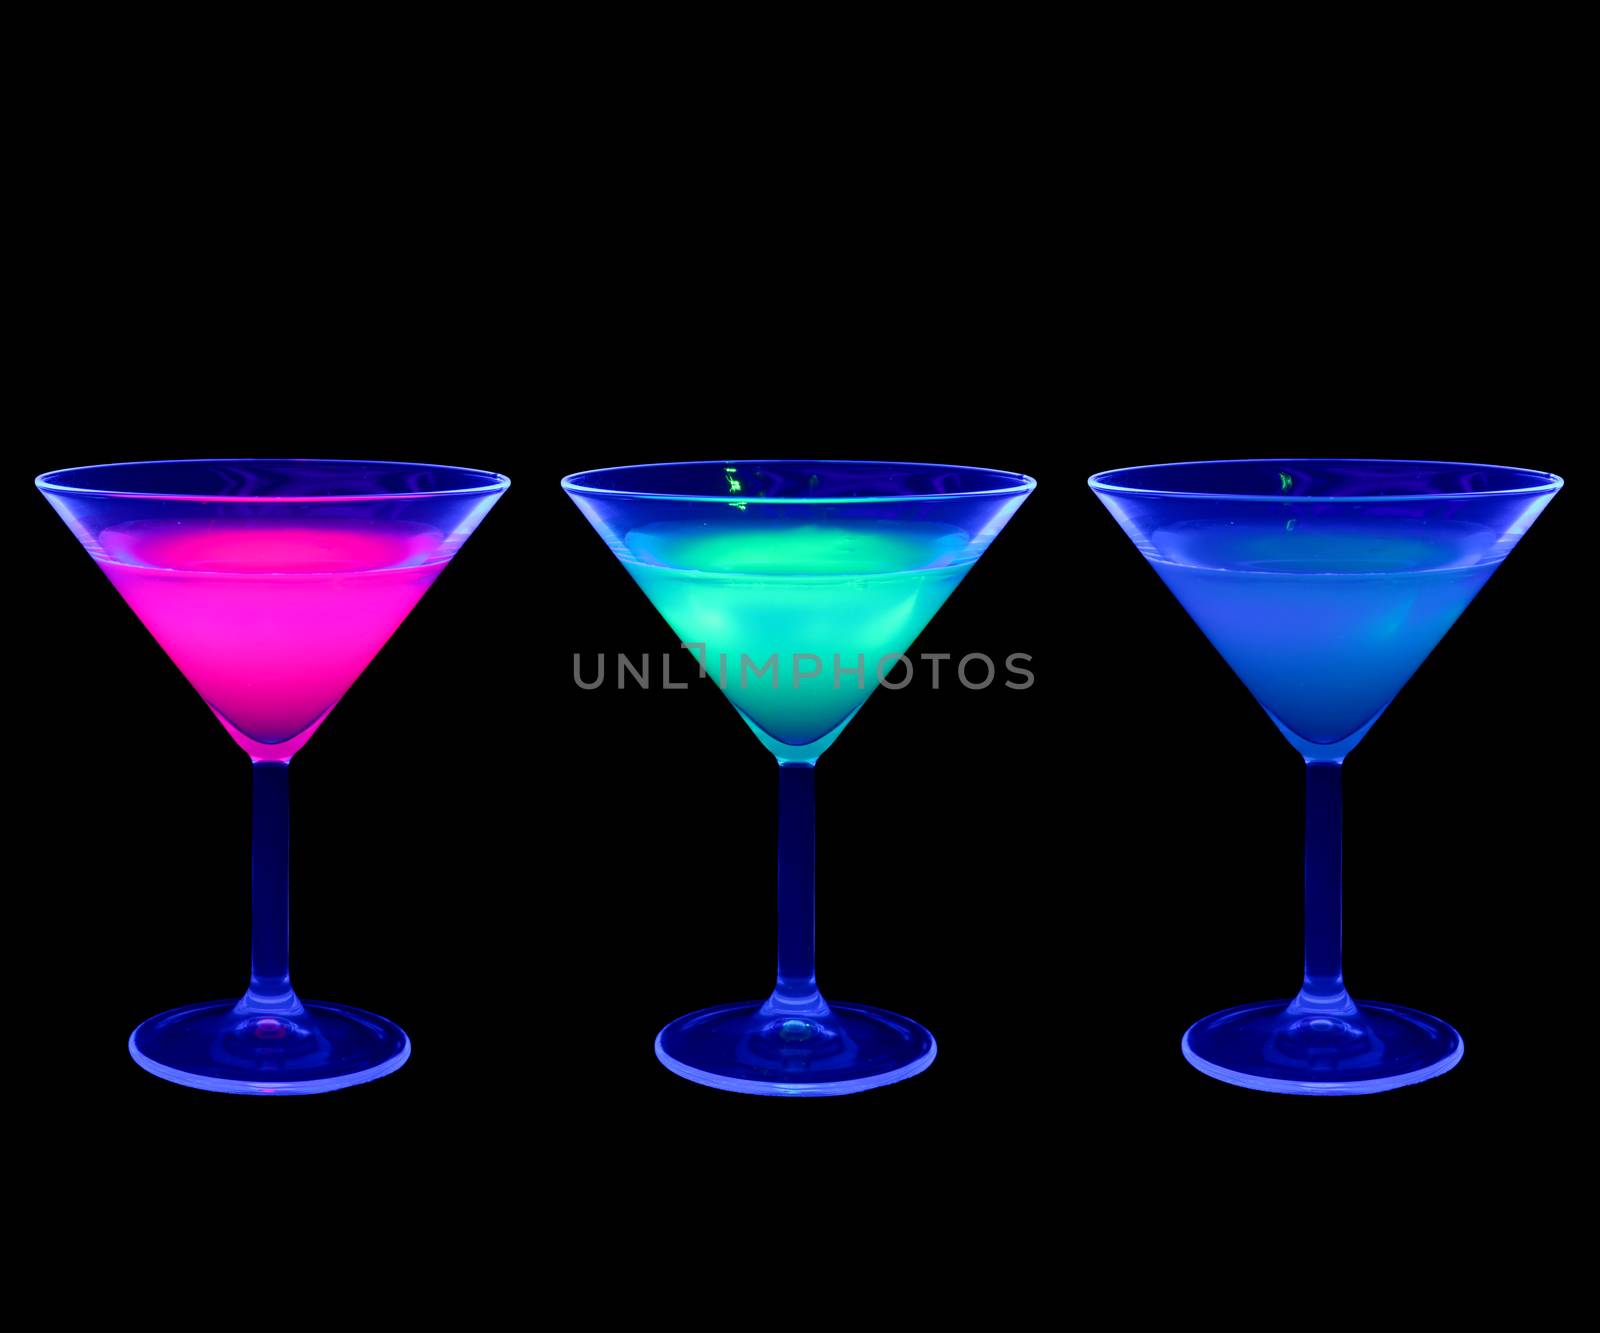 Colorful cocktail glass in UV light (black light)